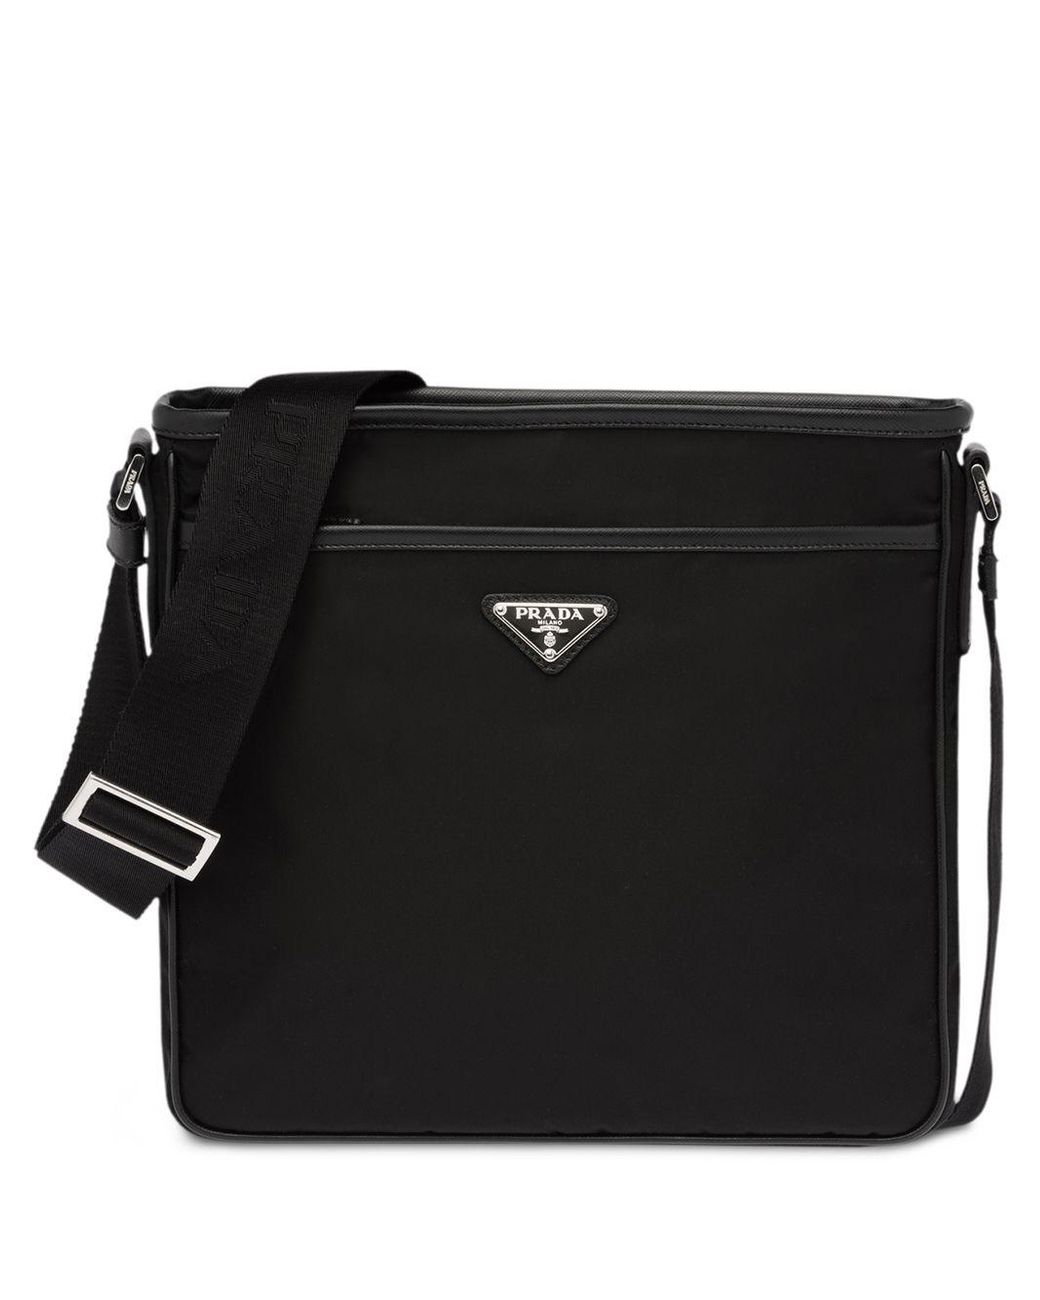 Prada Leather Nylon Shoulder Bag in Black for Men - Lyst